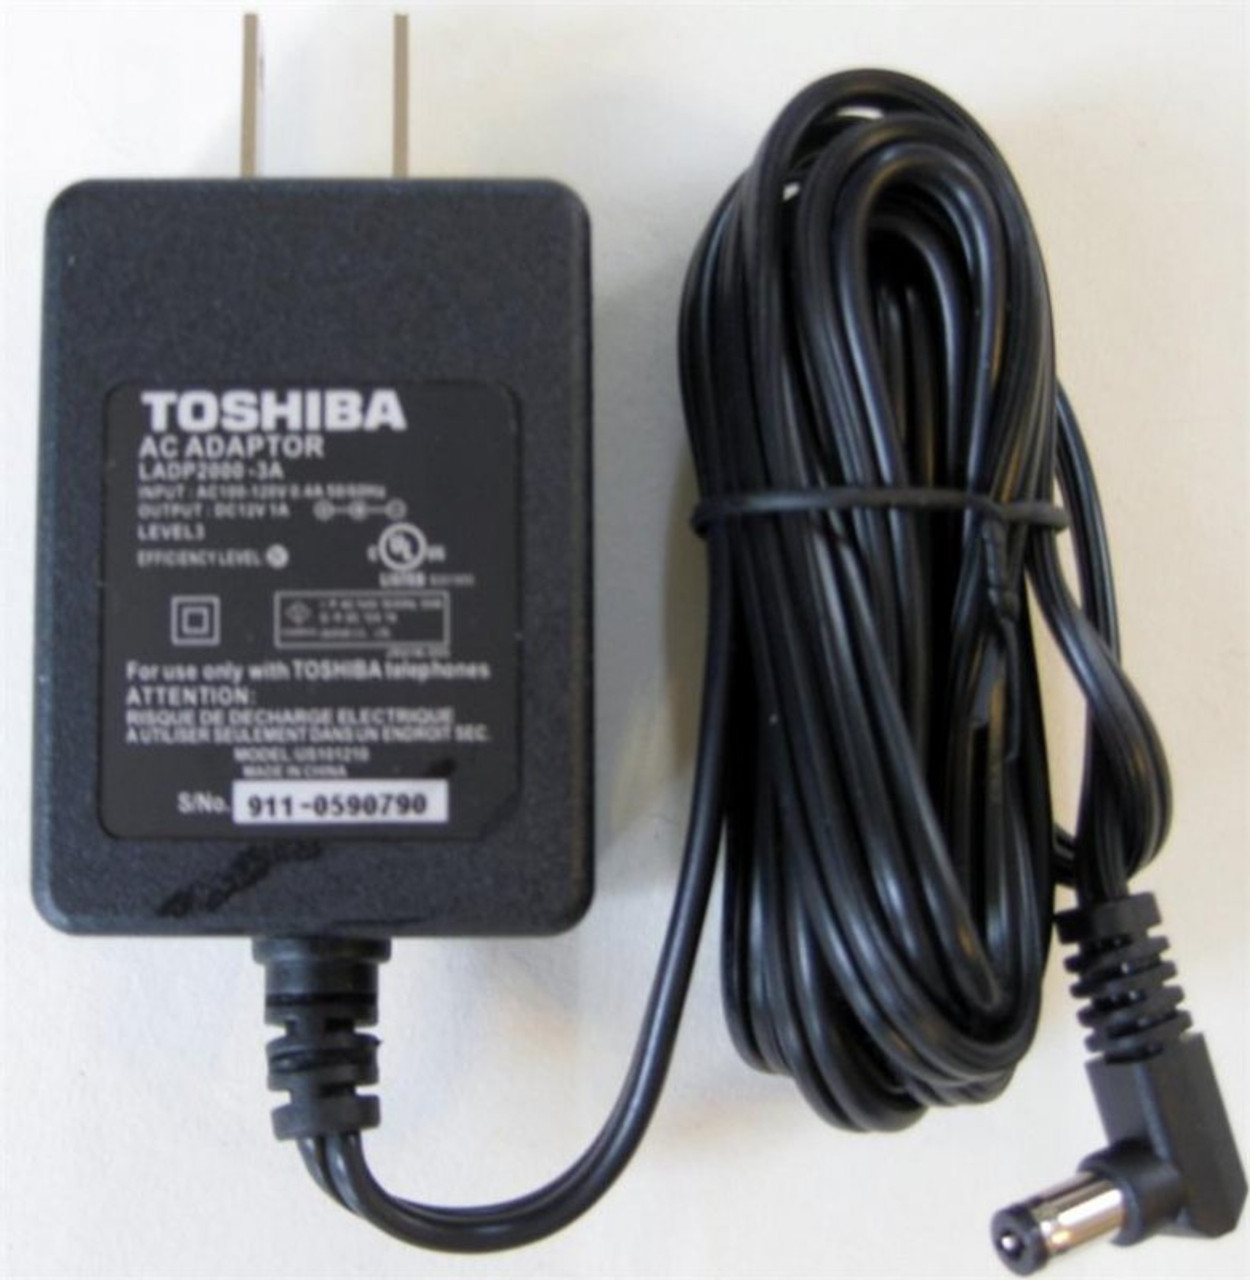 Toshiba Ladp2000-3a 12V Power Supply Adapter